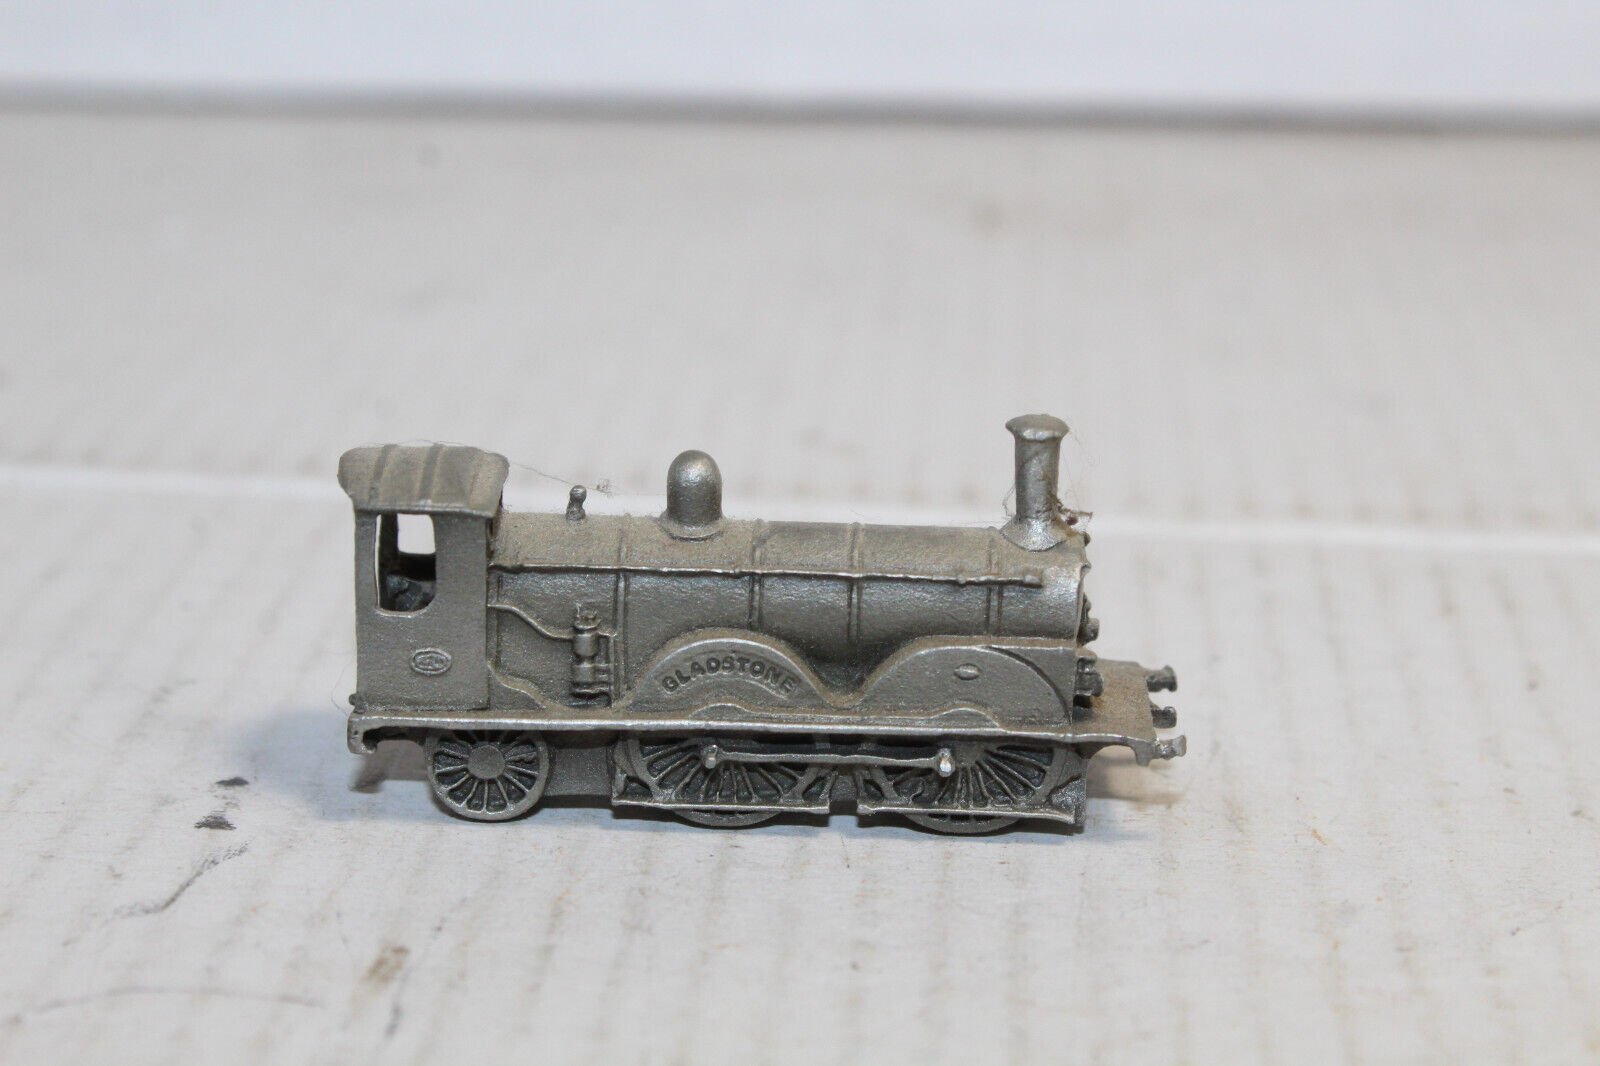 Danbury Mint Pewter Train Steam Engine Locomotive 1985 0-4-2 Gladstone